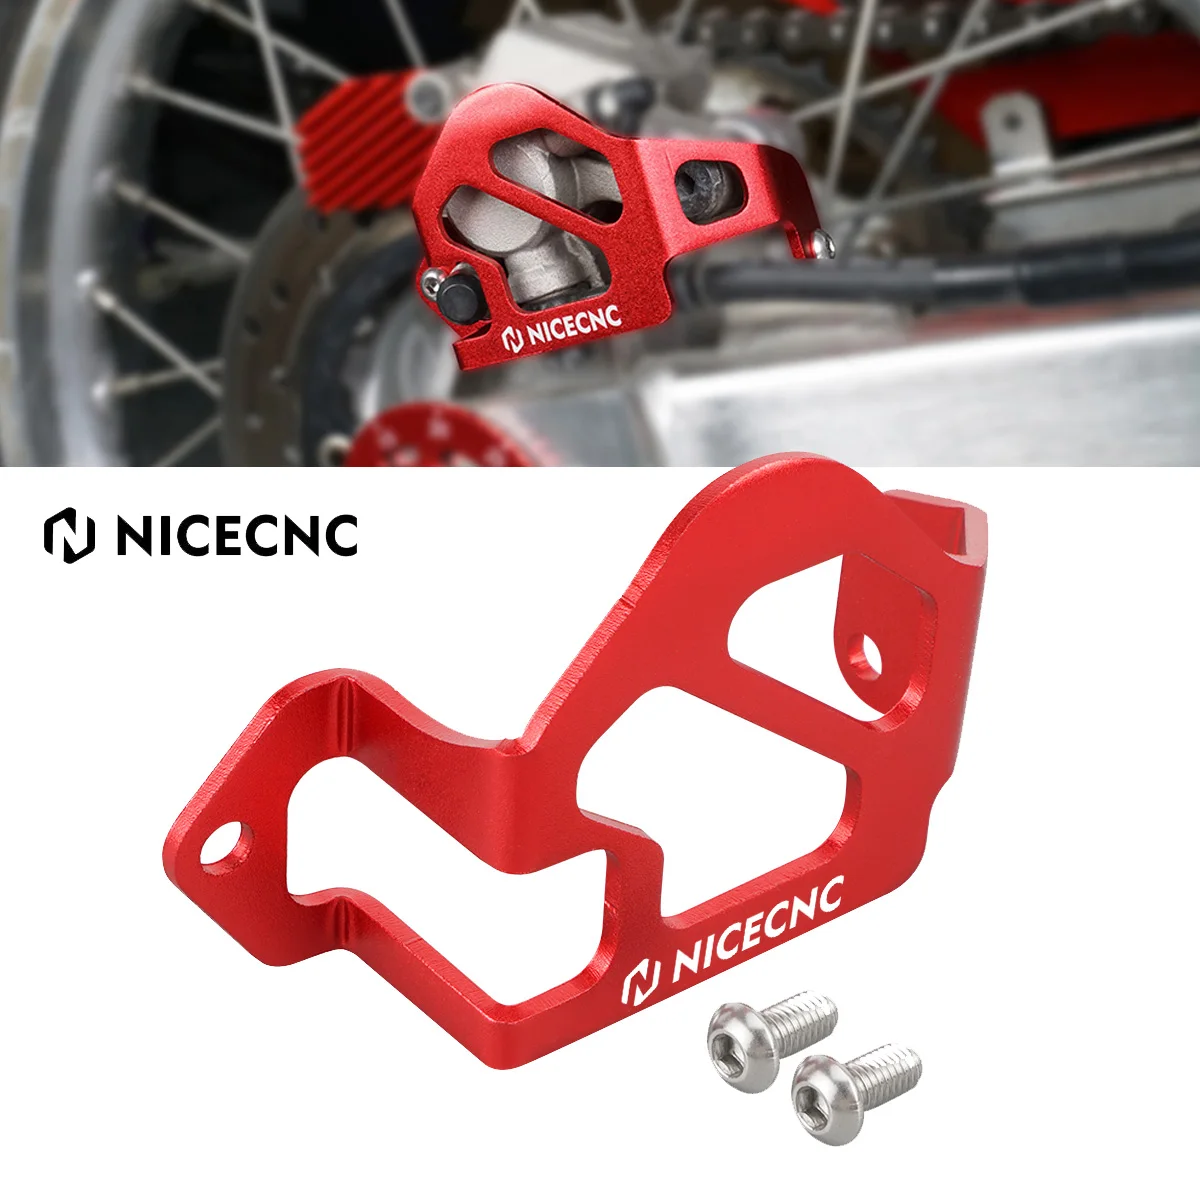 

NiceCNC Motorcycle Rear Brake Caliper Guard Cover Protector for Honda XR 650L XR650L XRL 650 1993-2022 2021 2020 Billet Aluminum